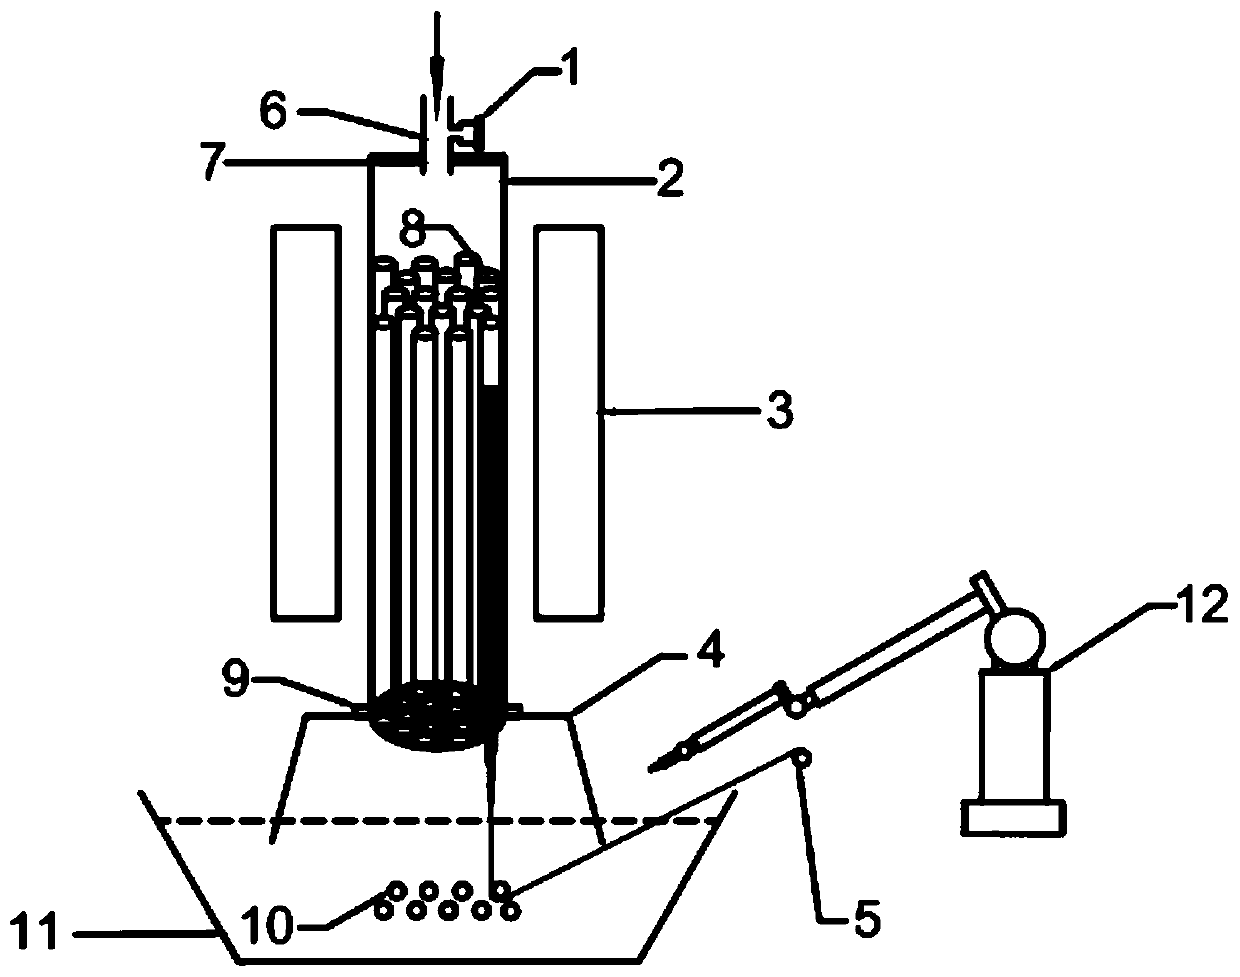 Method for batch production of carbon nanotube fibers